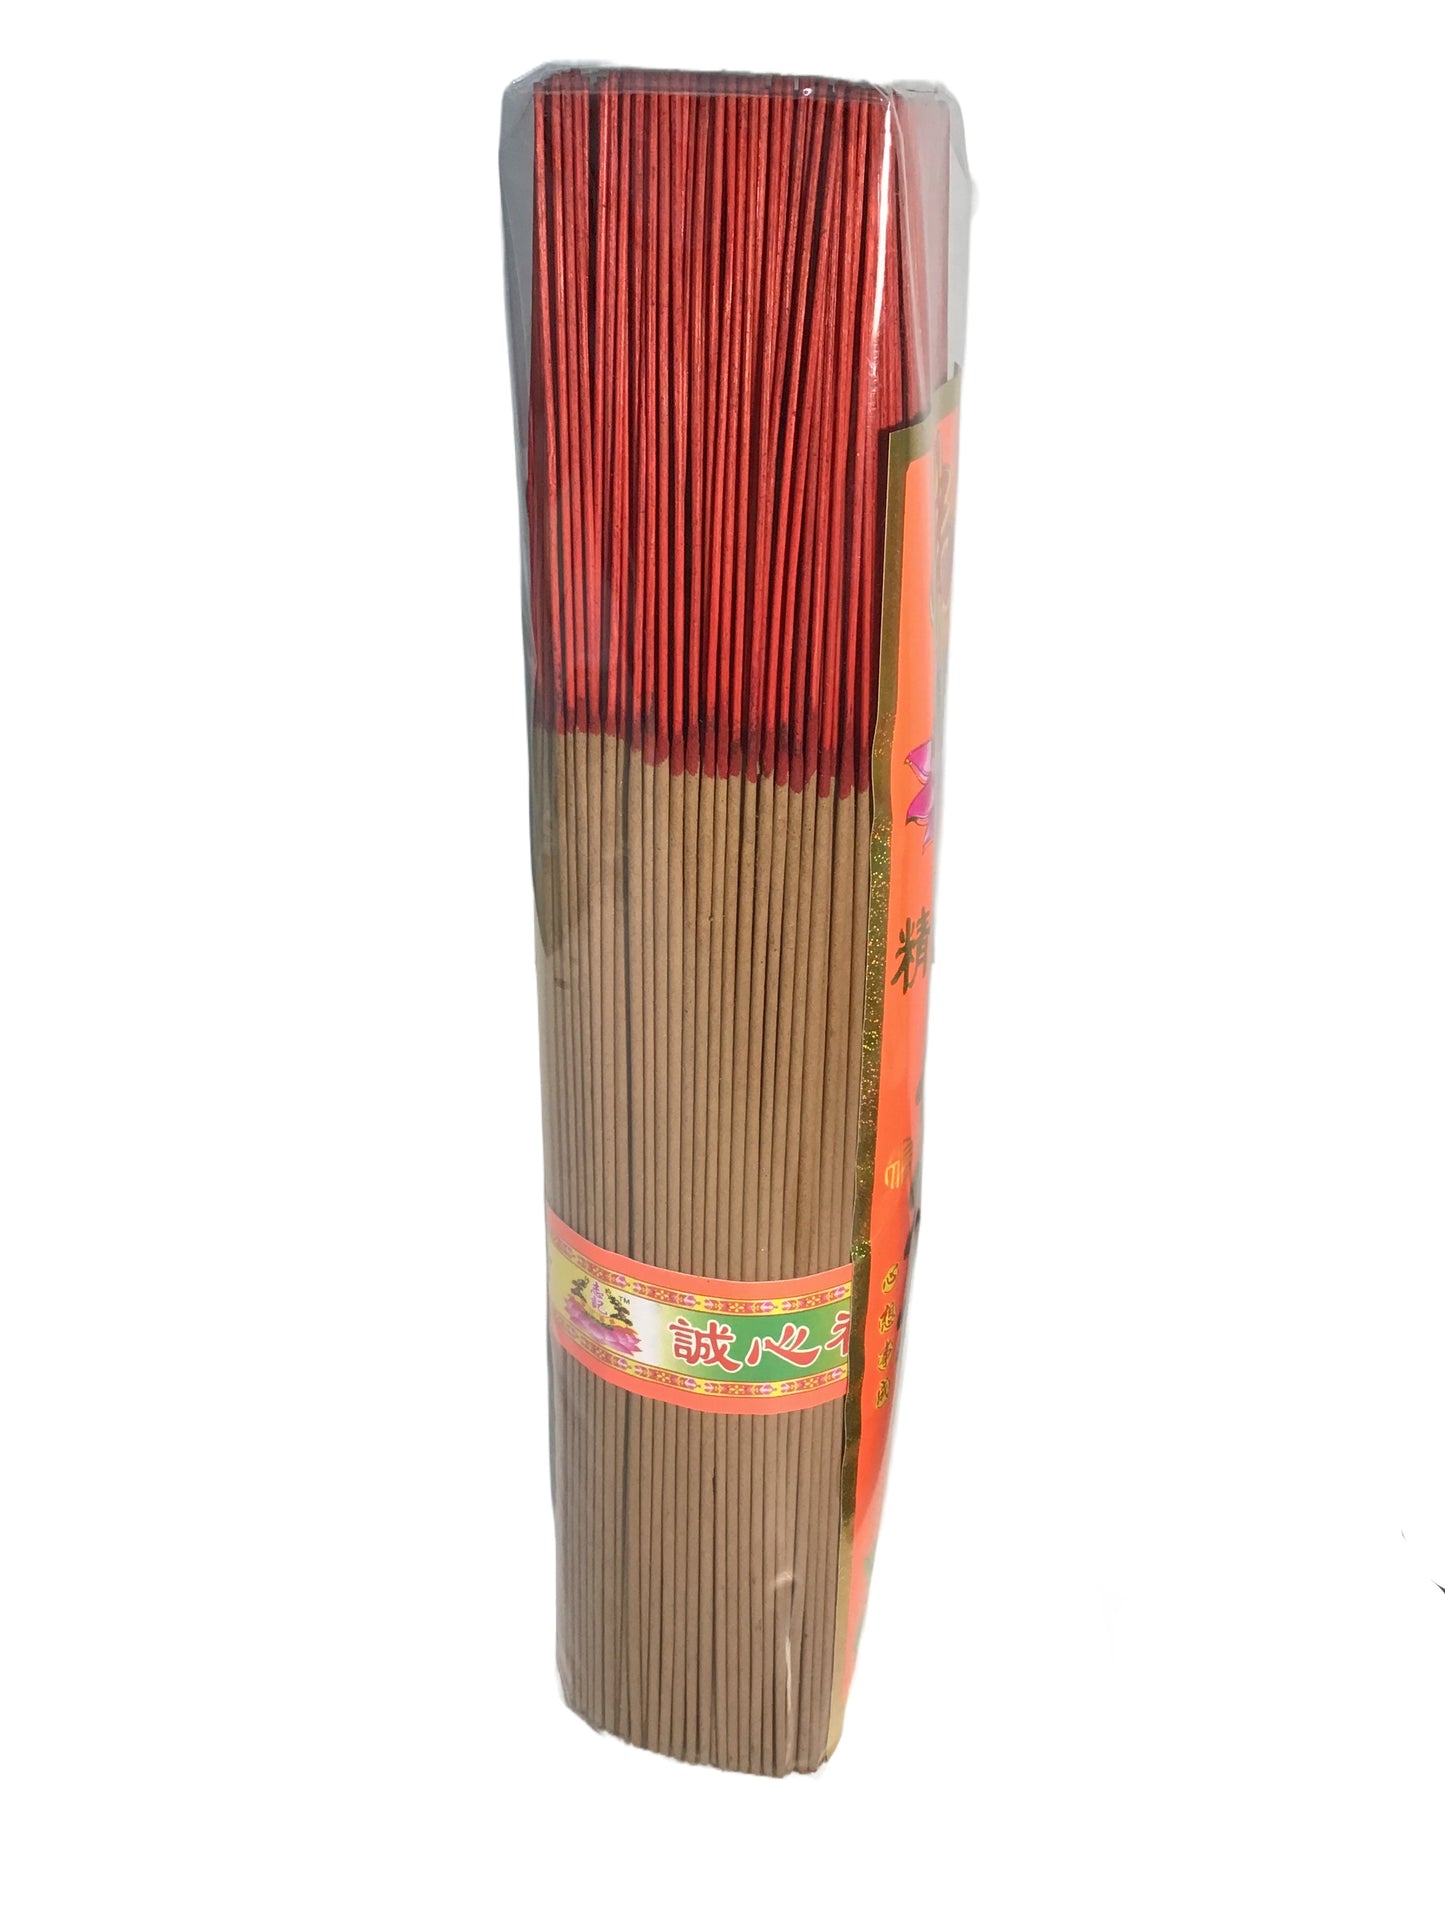 32cm Long Incense Sticks for Buddha - About 800 Sticks 佛 精选无烟檀香